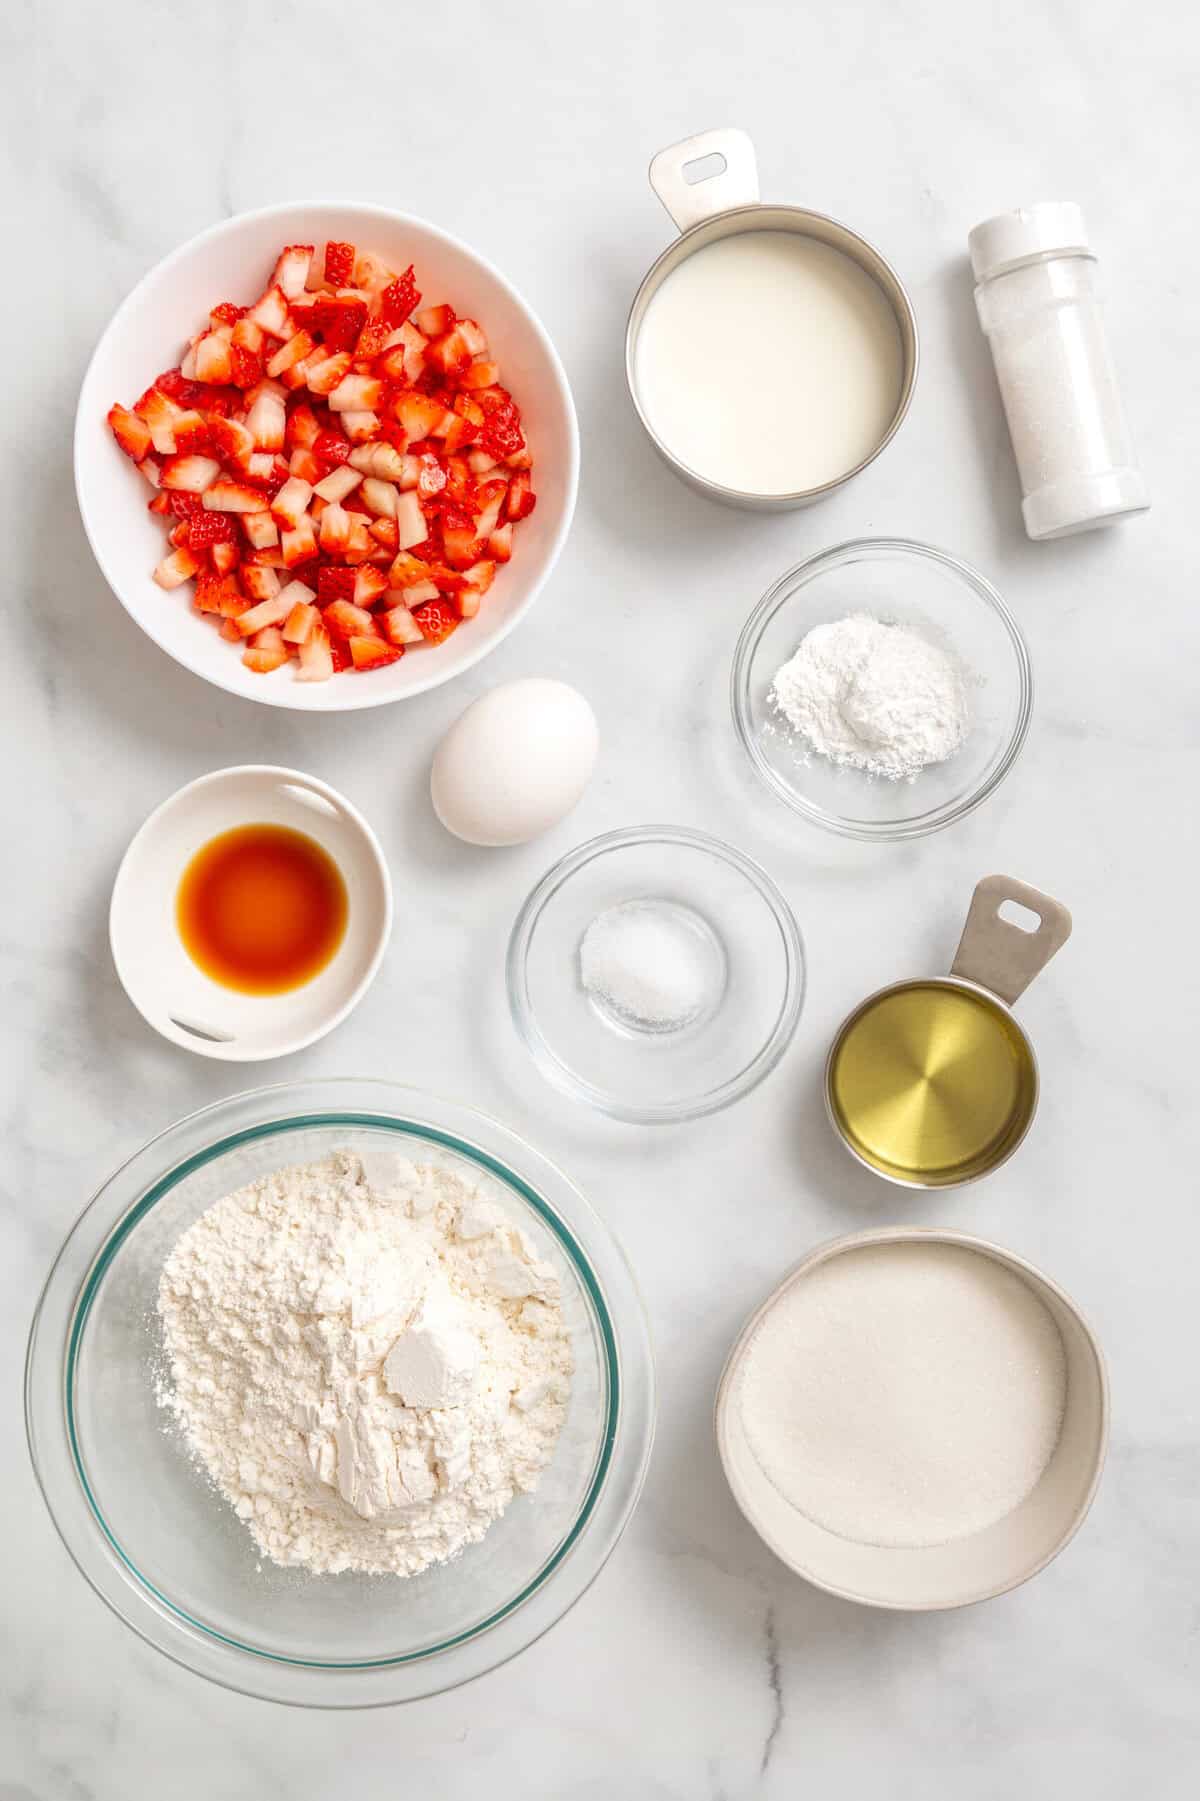 Ingredients to make strawberry muffins.